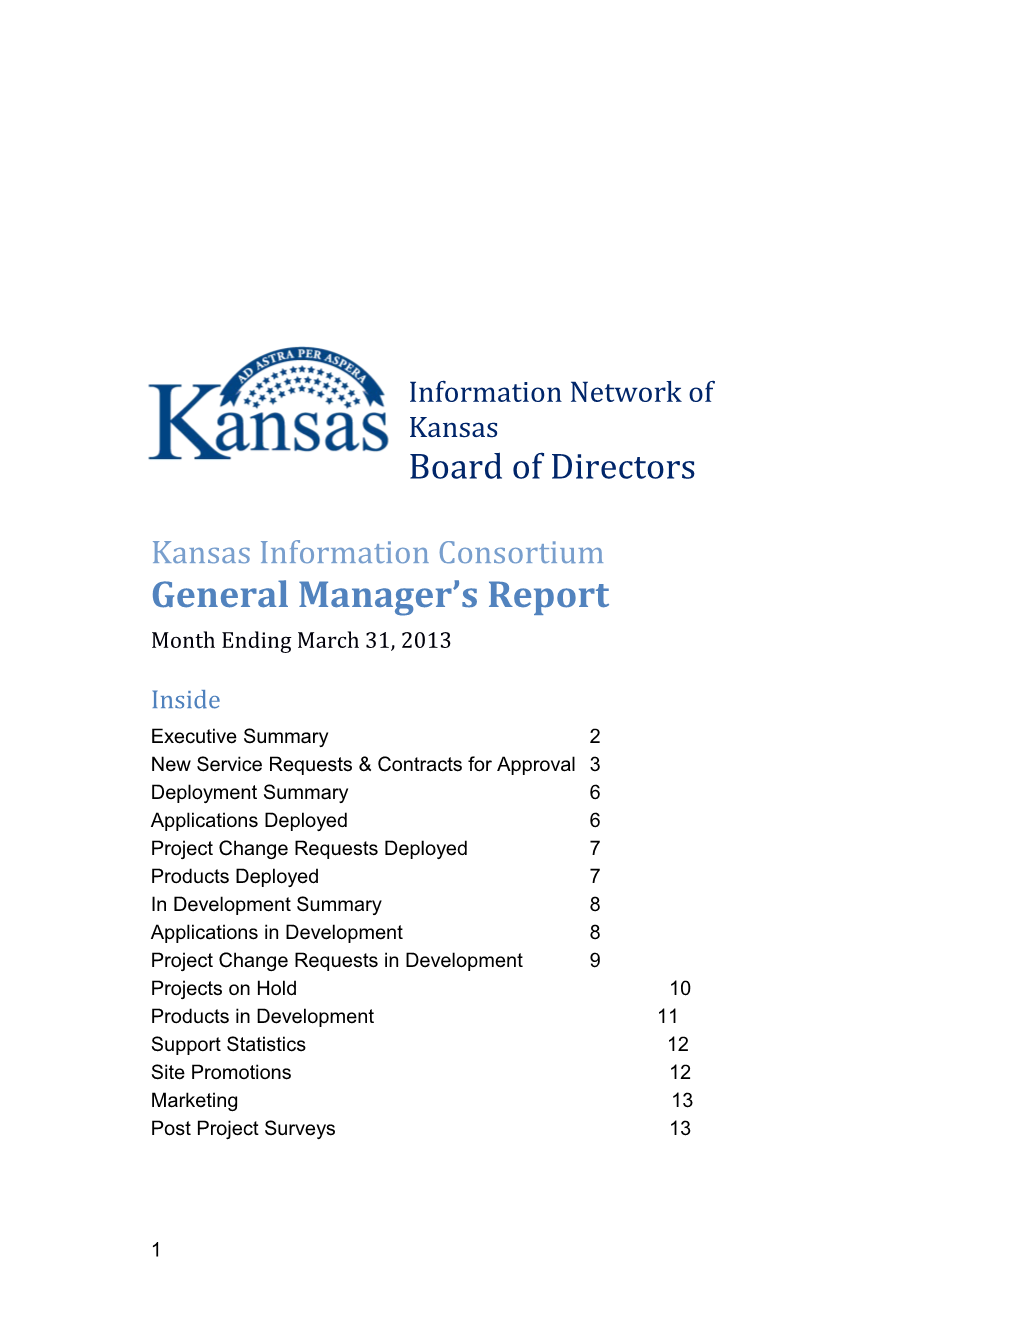 Information Networkof Kansas